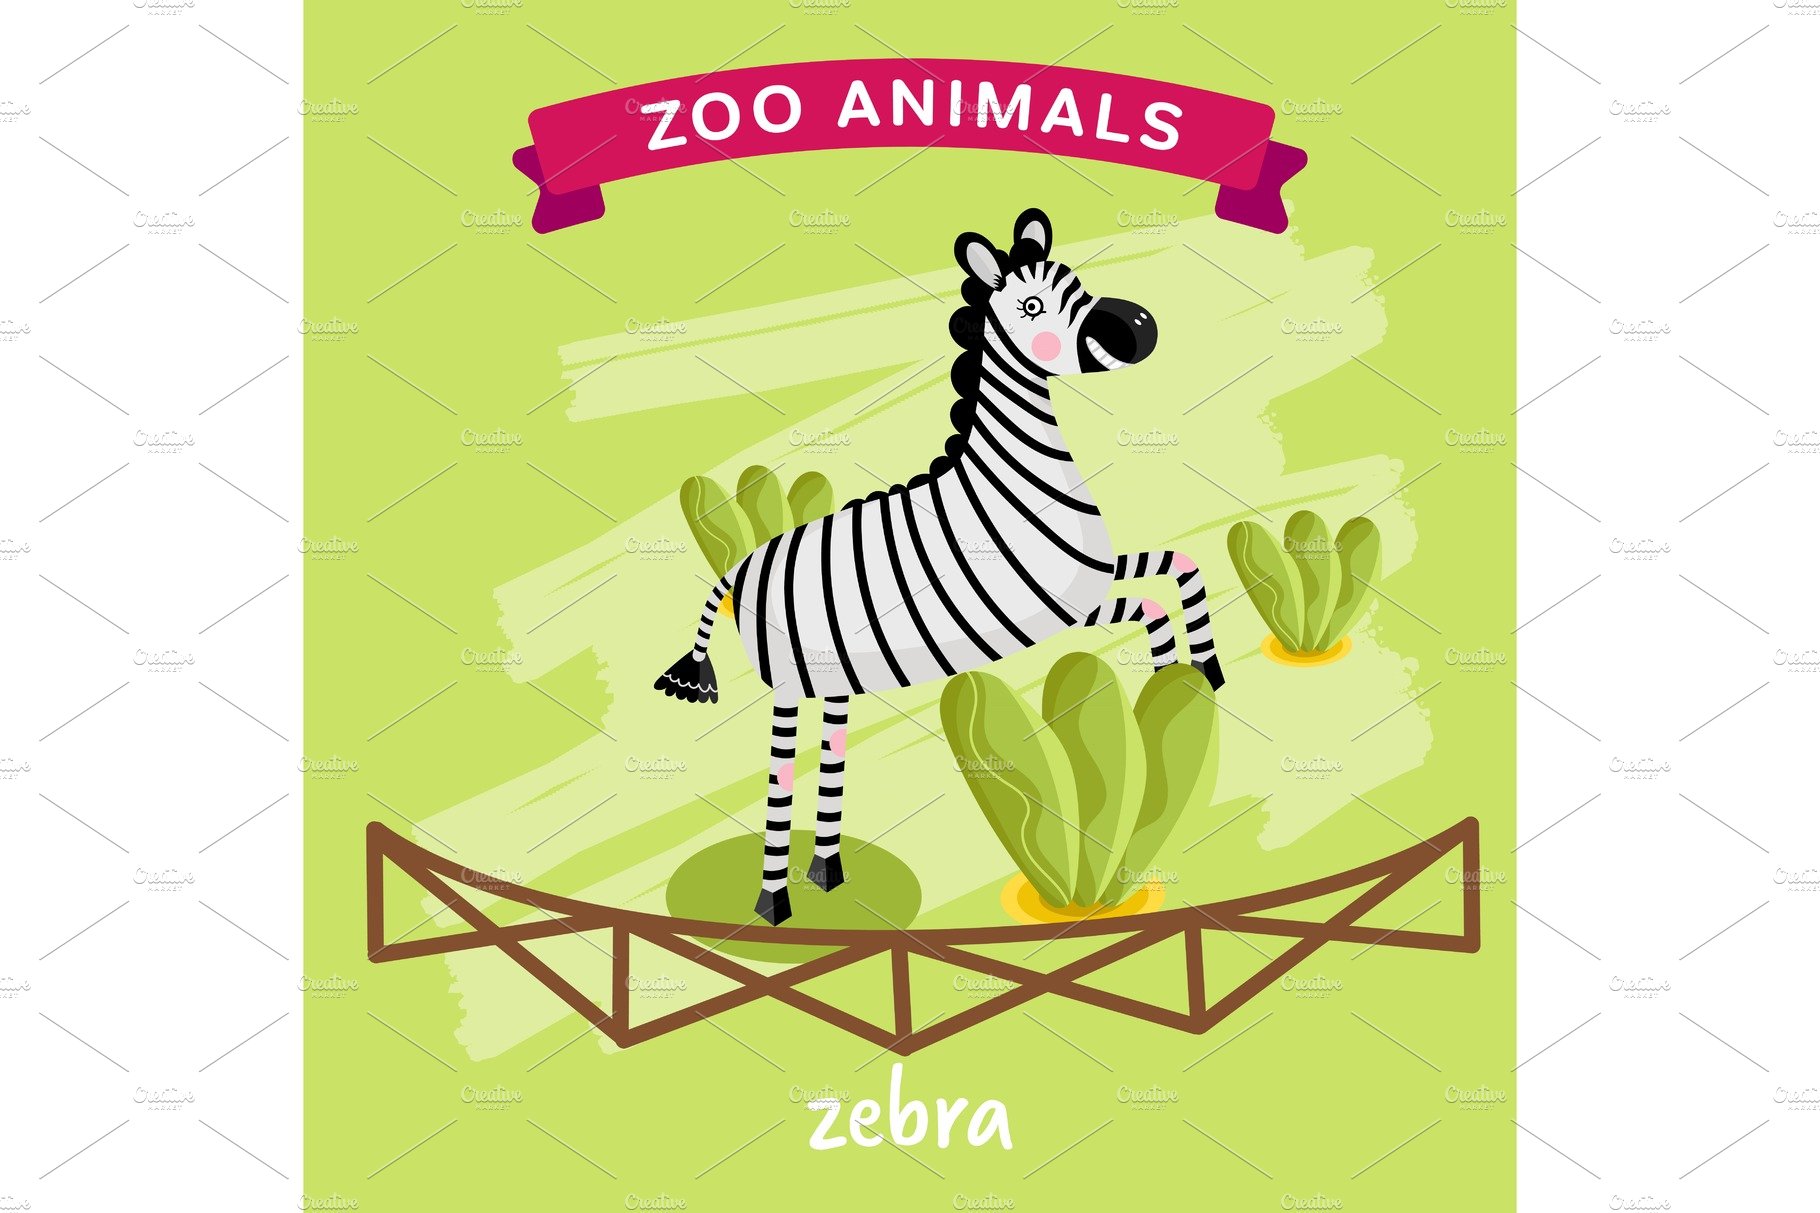 Vector Zoo Animal, Zebra cover image.